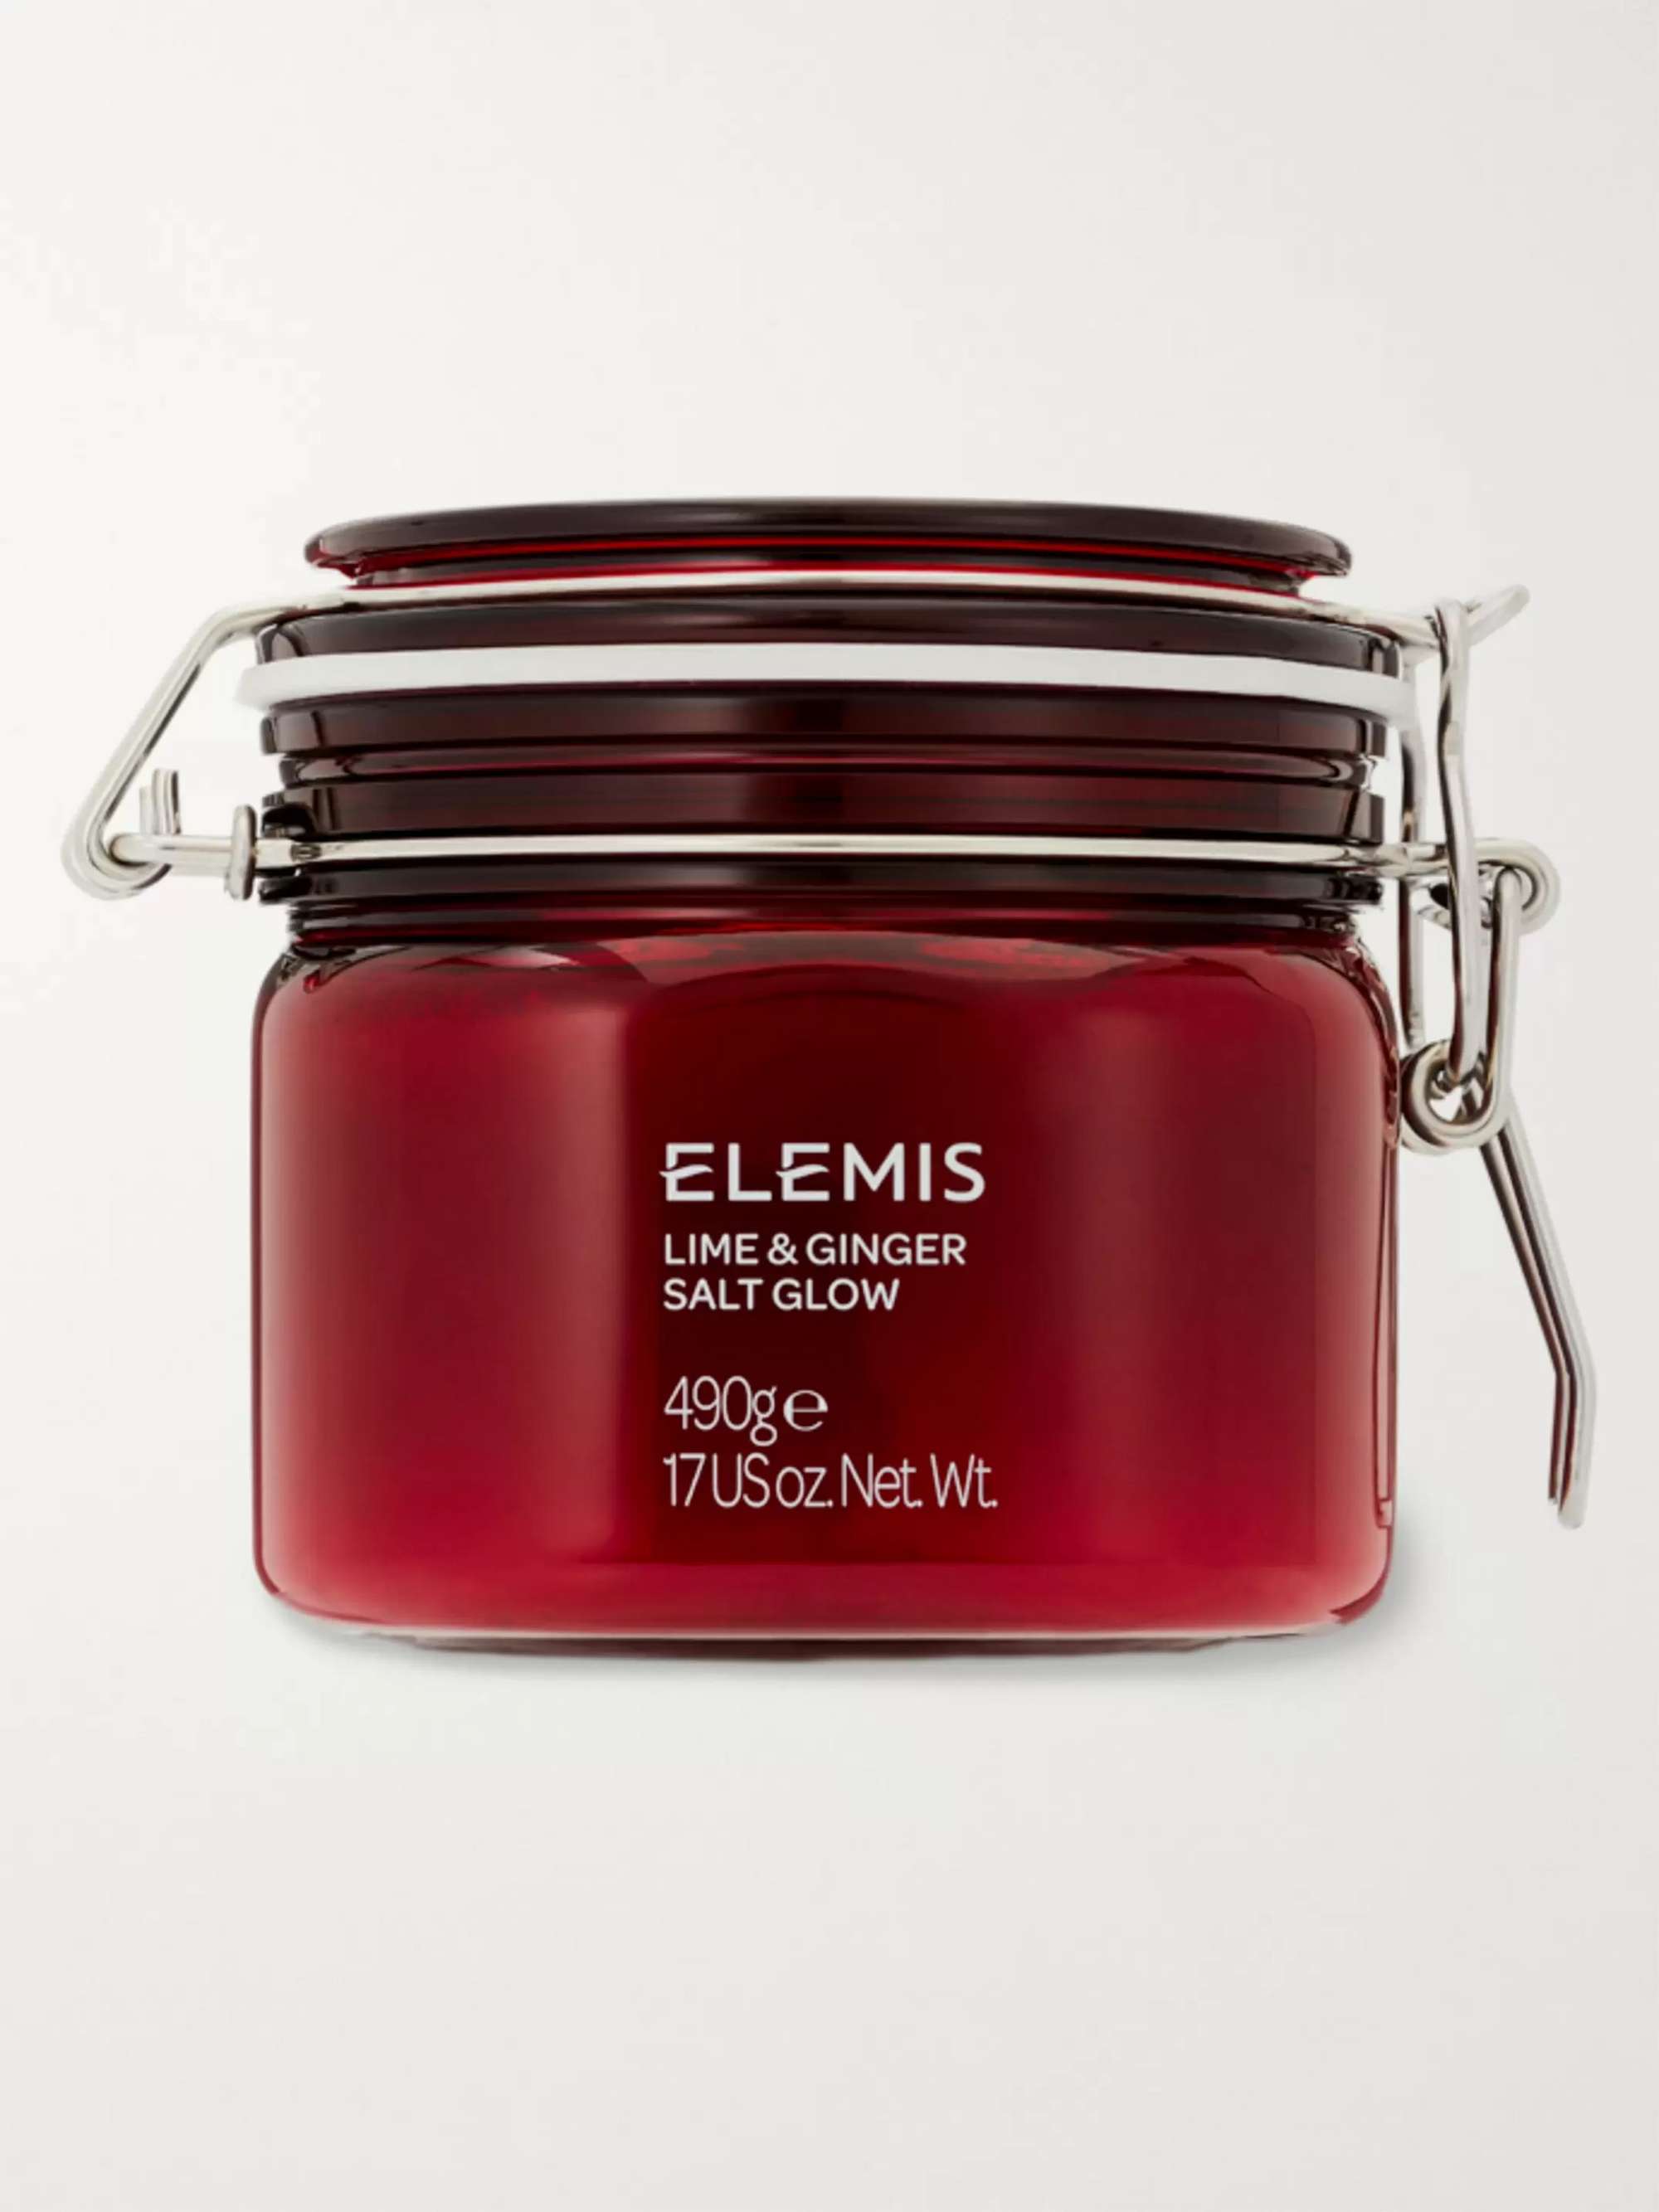 ELEMIS Lime and Ginger Salt Glow, 490g